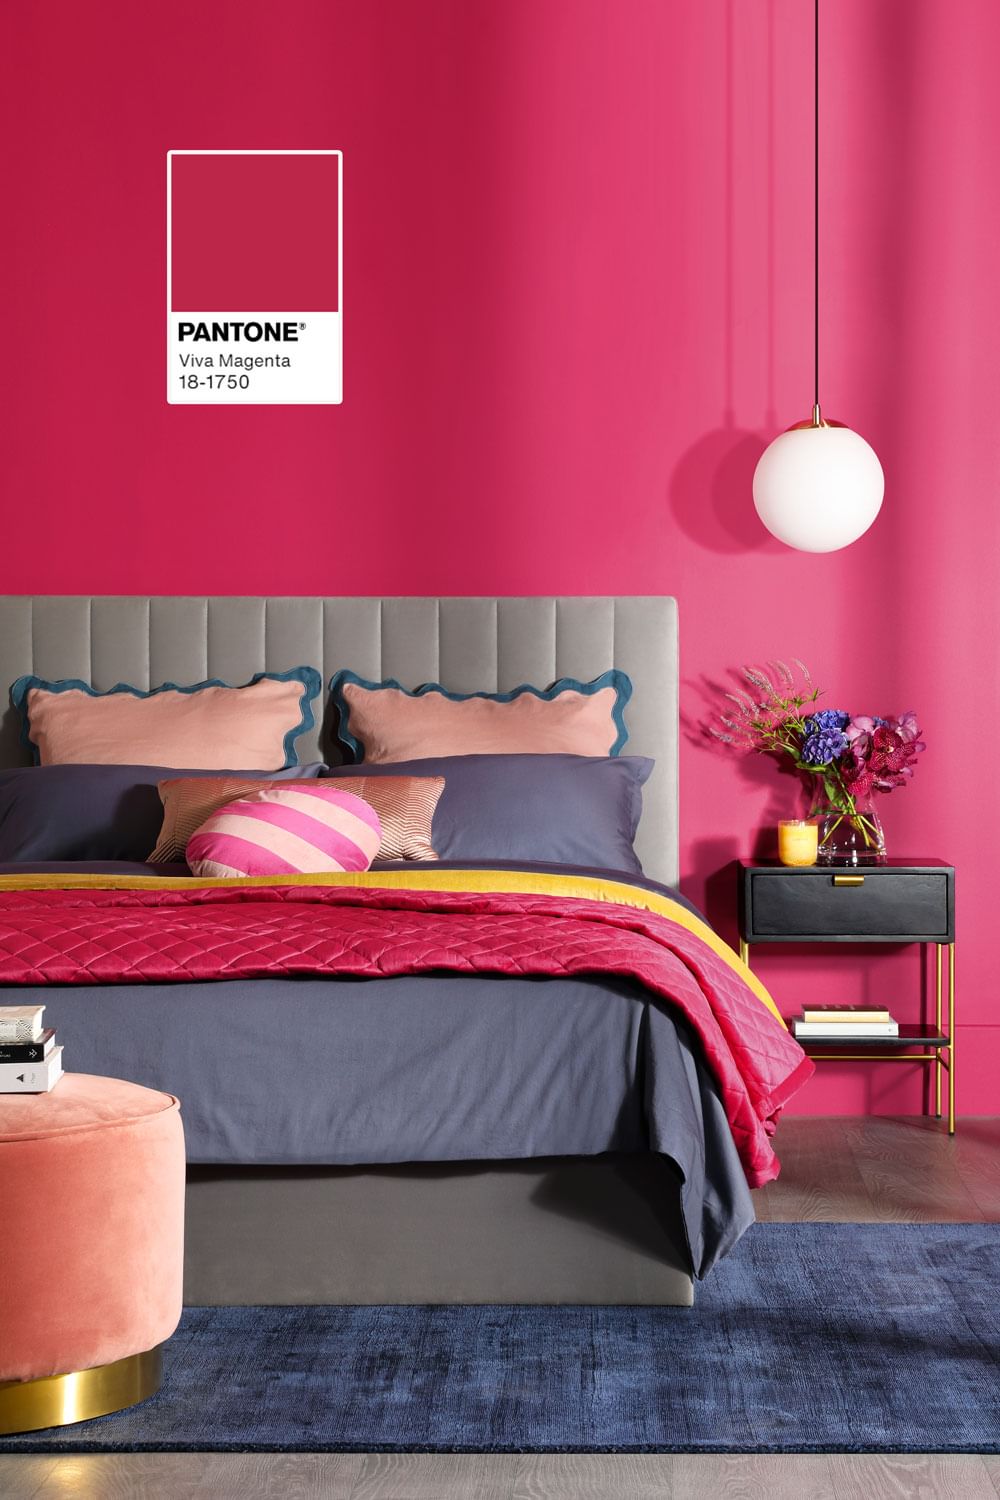 Viva Magenta bedroom with Pantone image